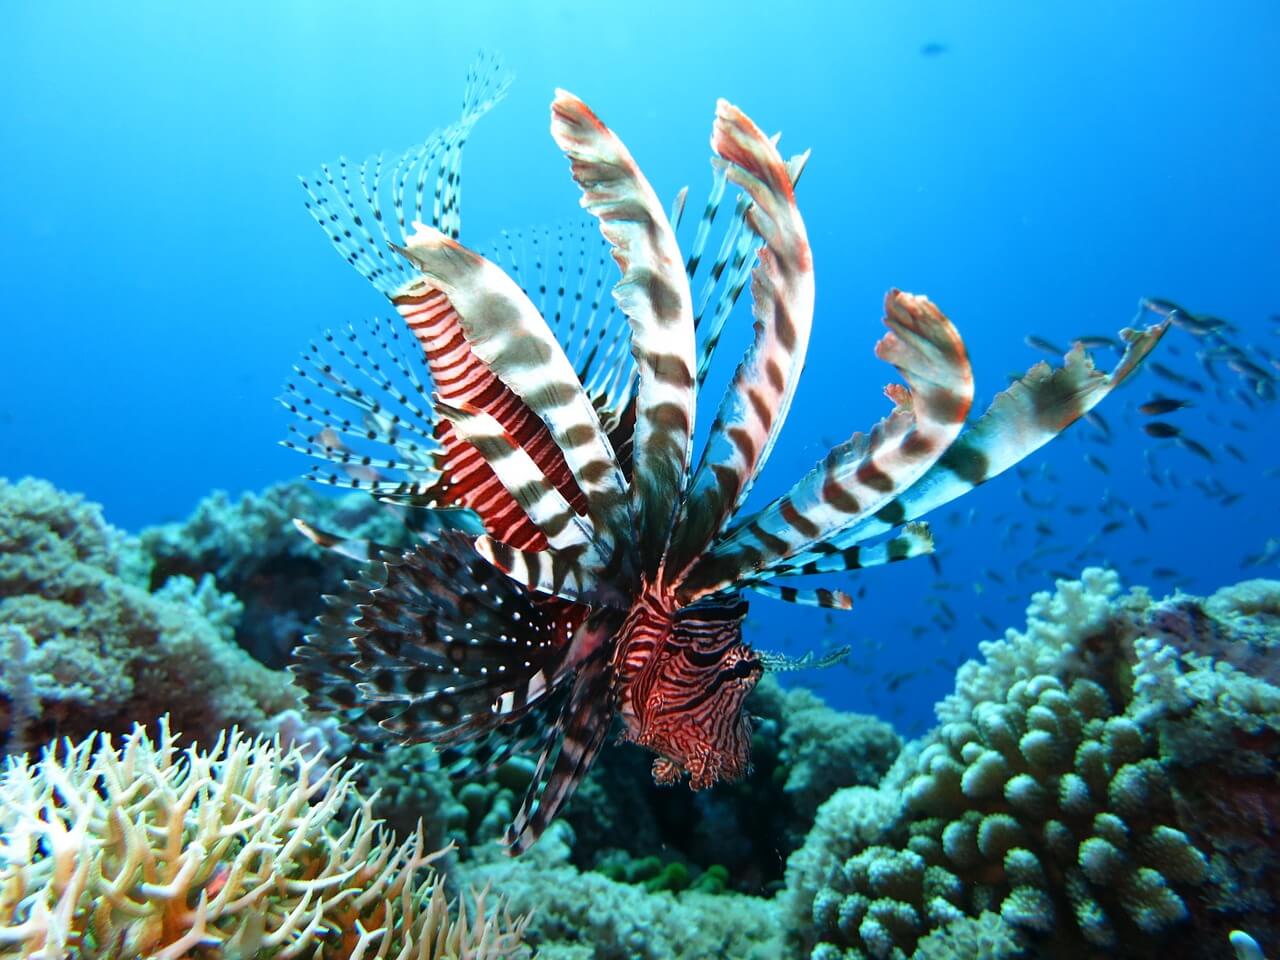 https://pixabay.com/photos/lionfish-scuba-diving-underwater-1430225/